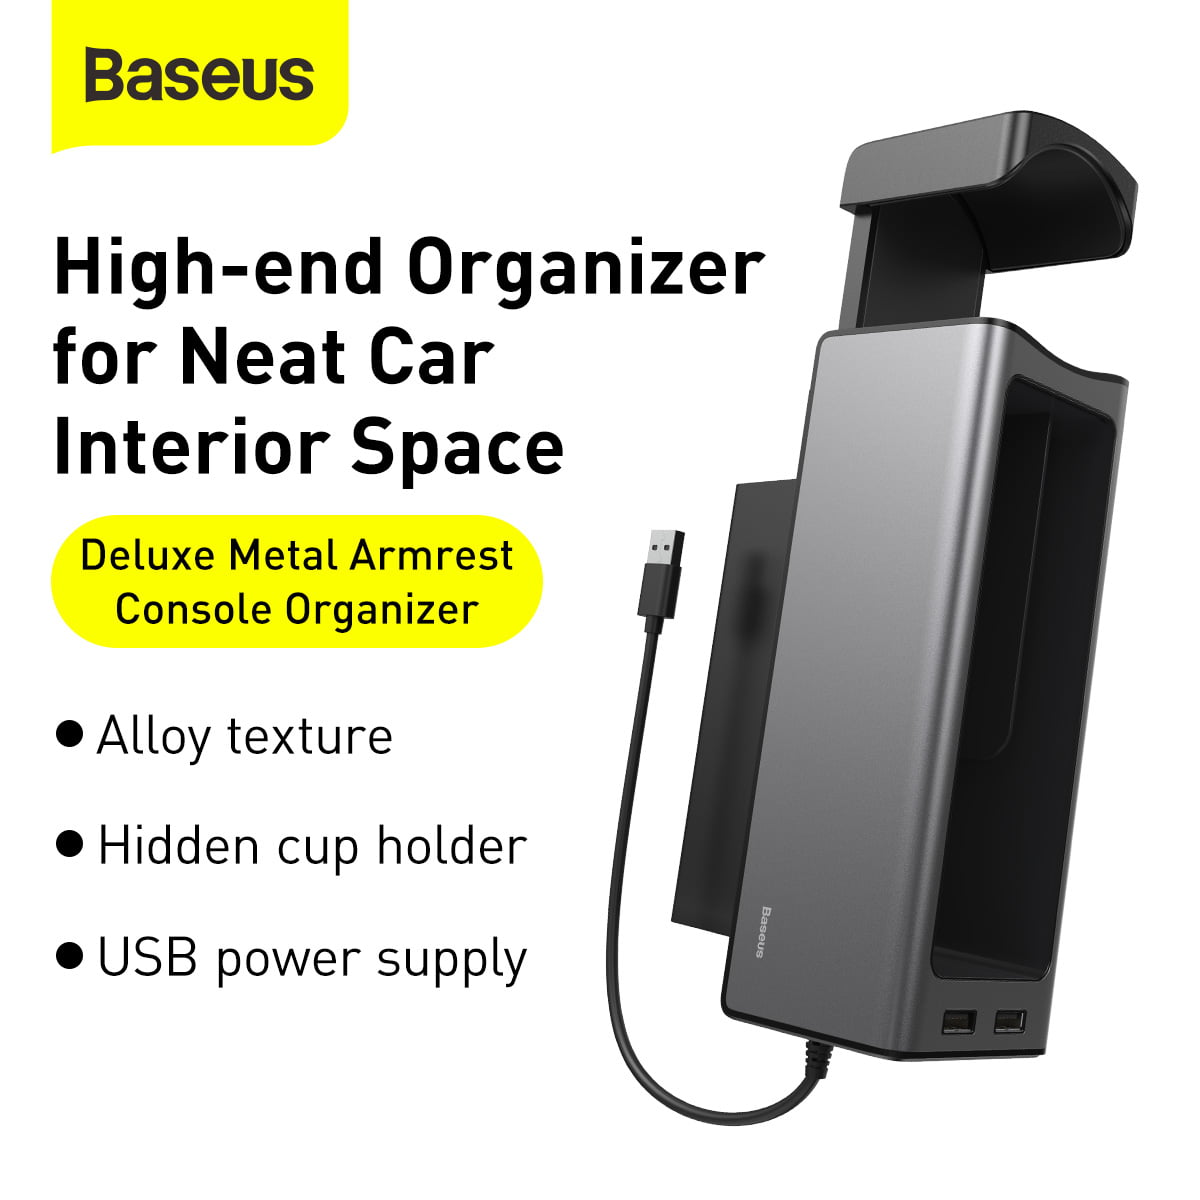 Baseus Deluxe Metal Armrest Console Organizer Dual USB Power Supply